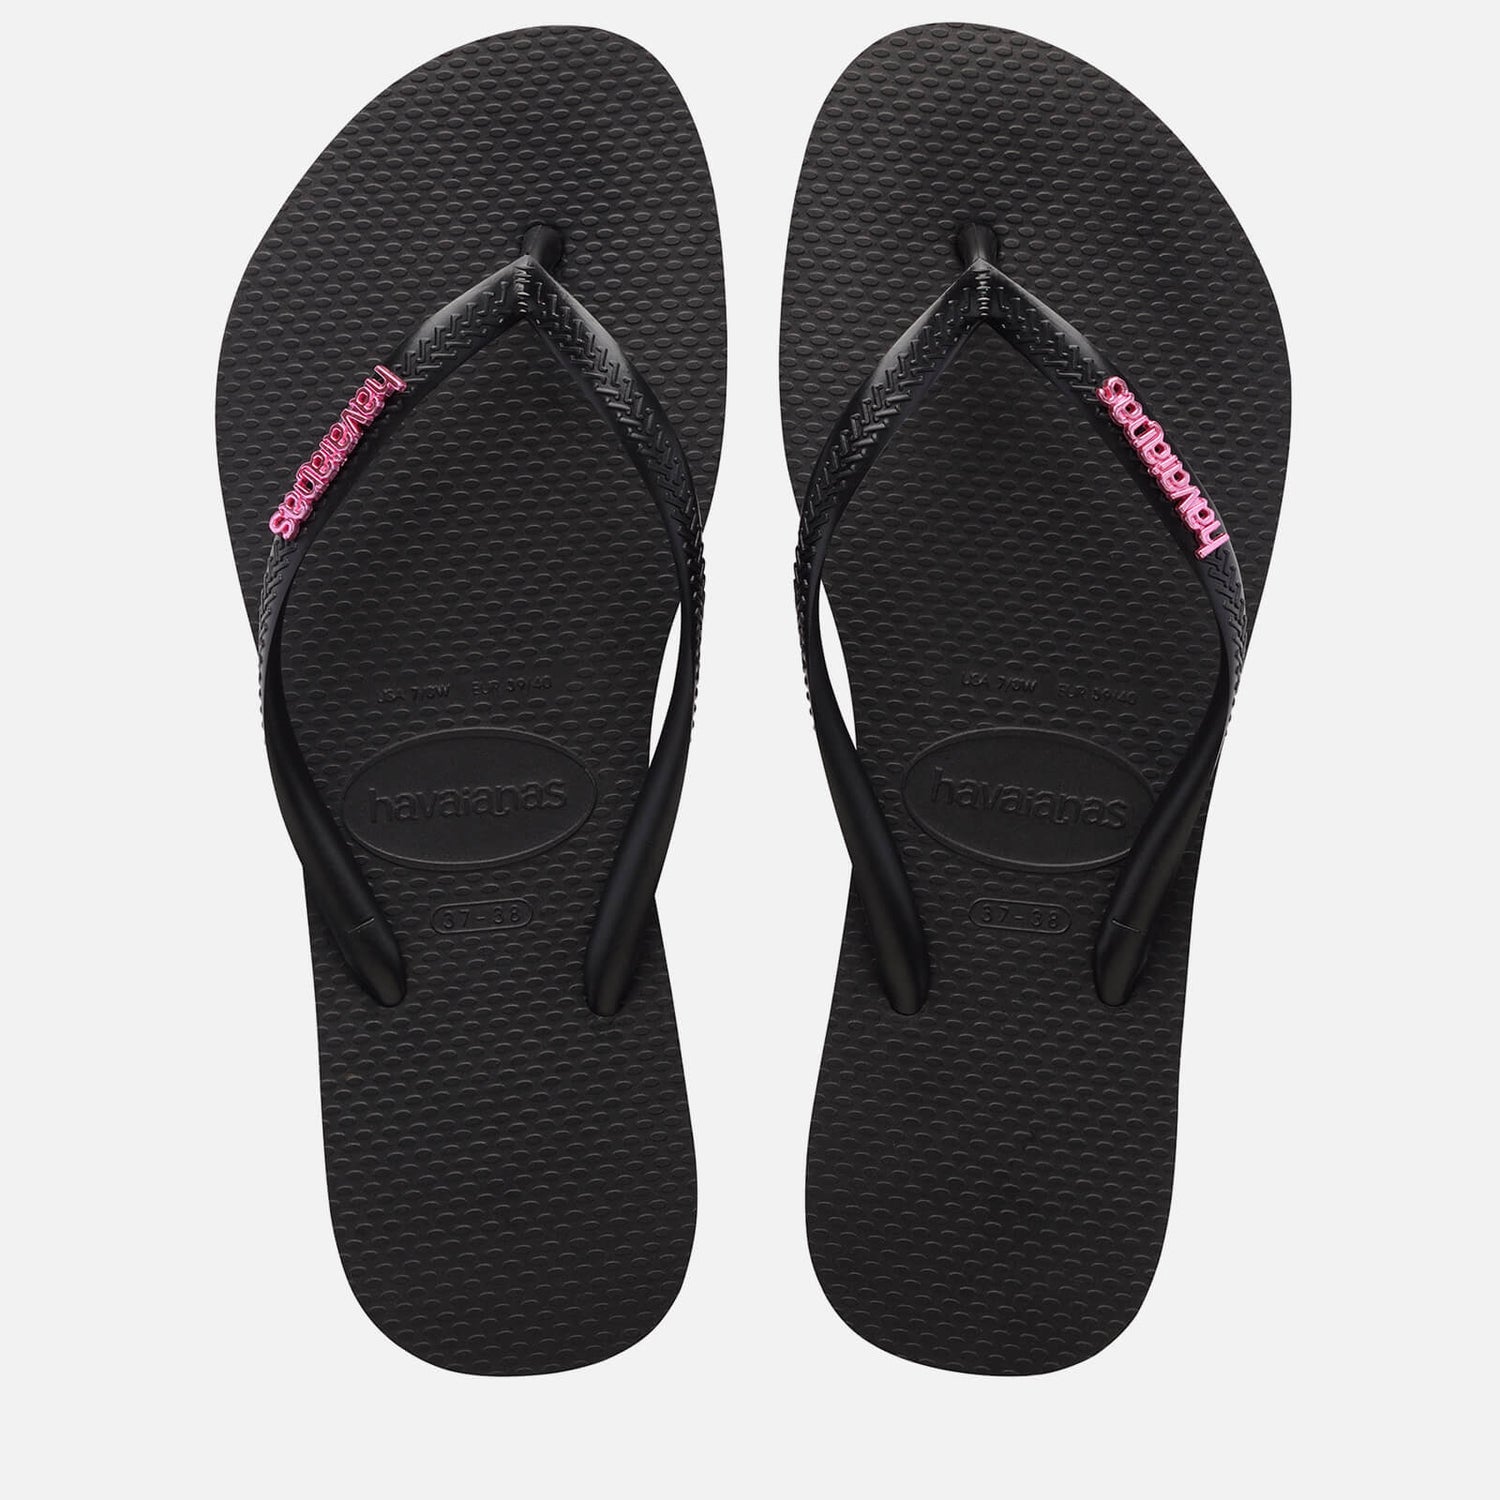 Havaianas Women's Slim Logo Metallic Flip Flops - Black/Pink - UK 3/4